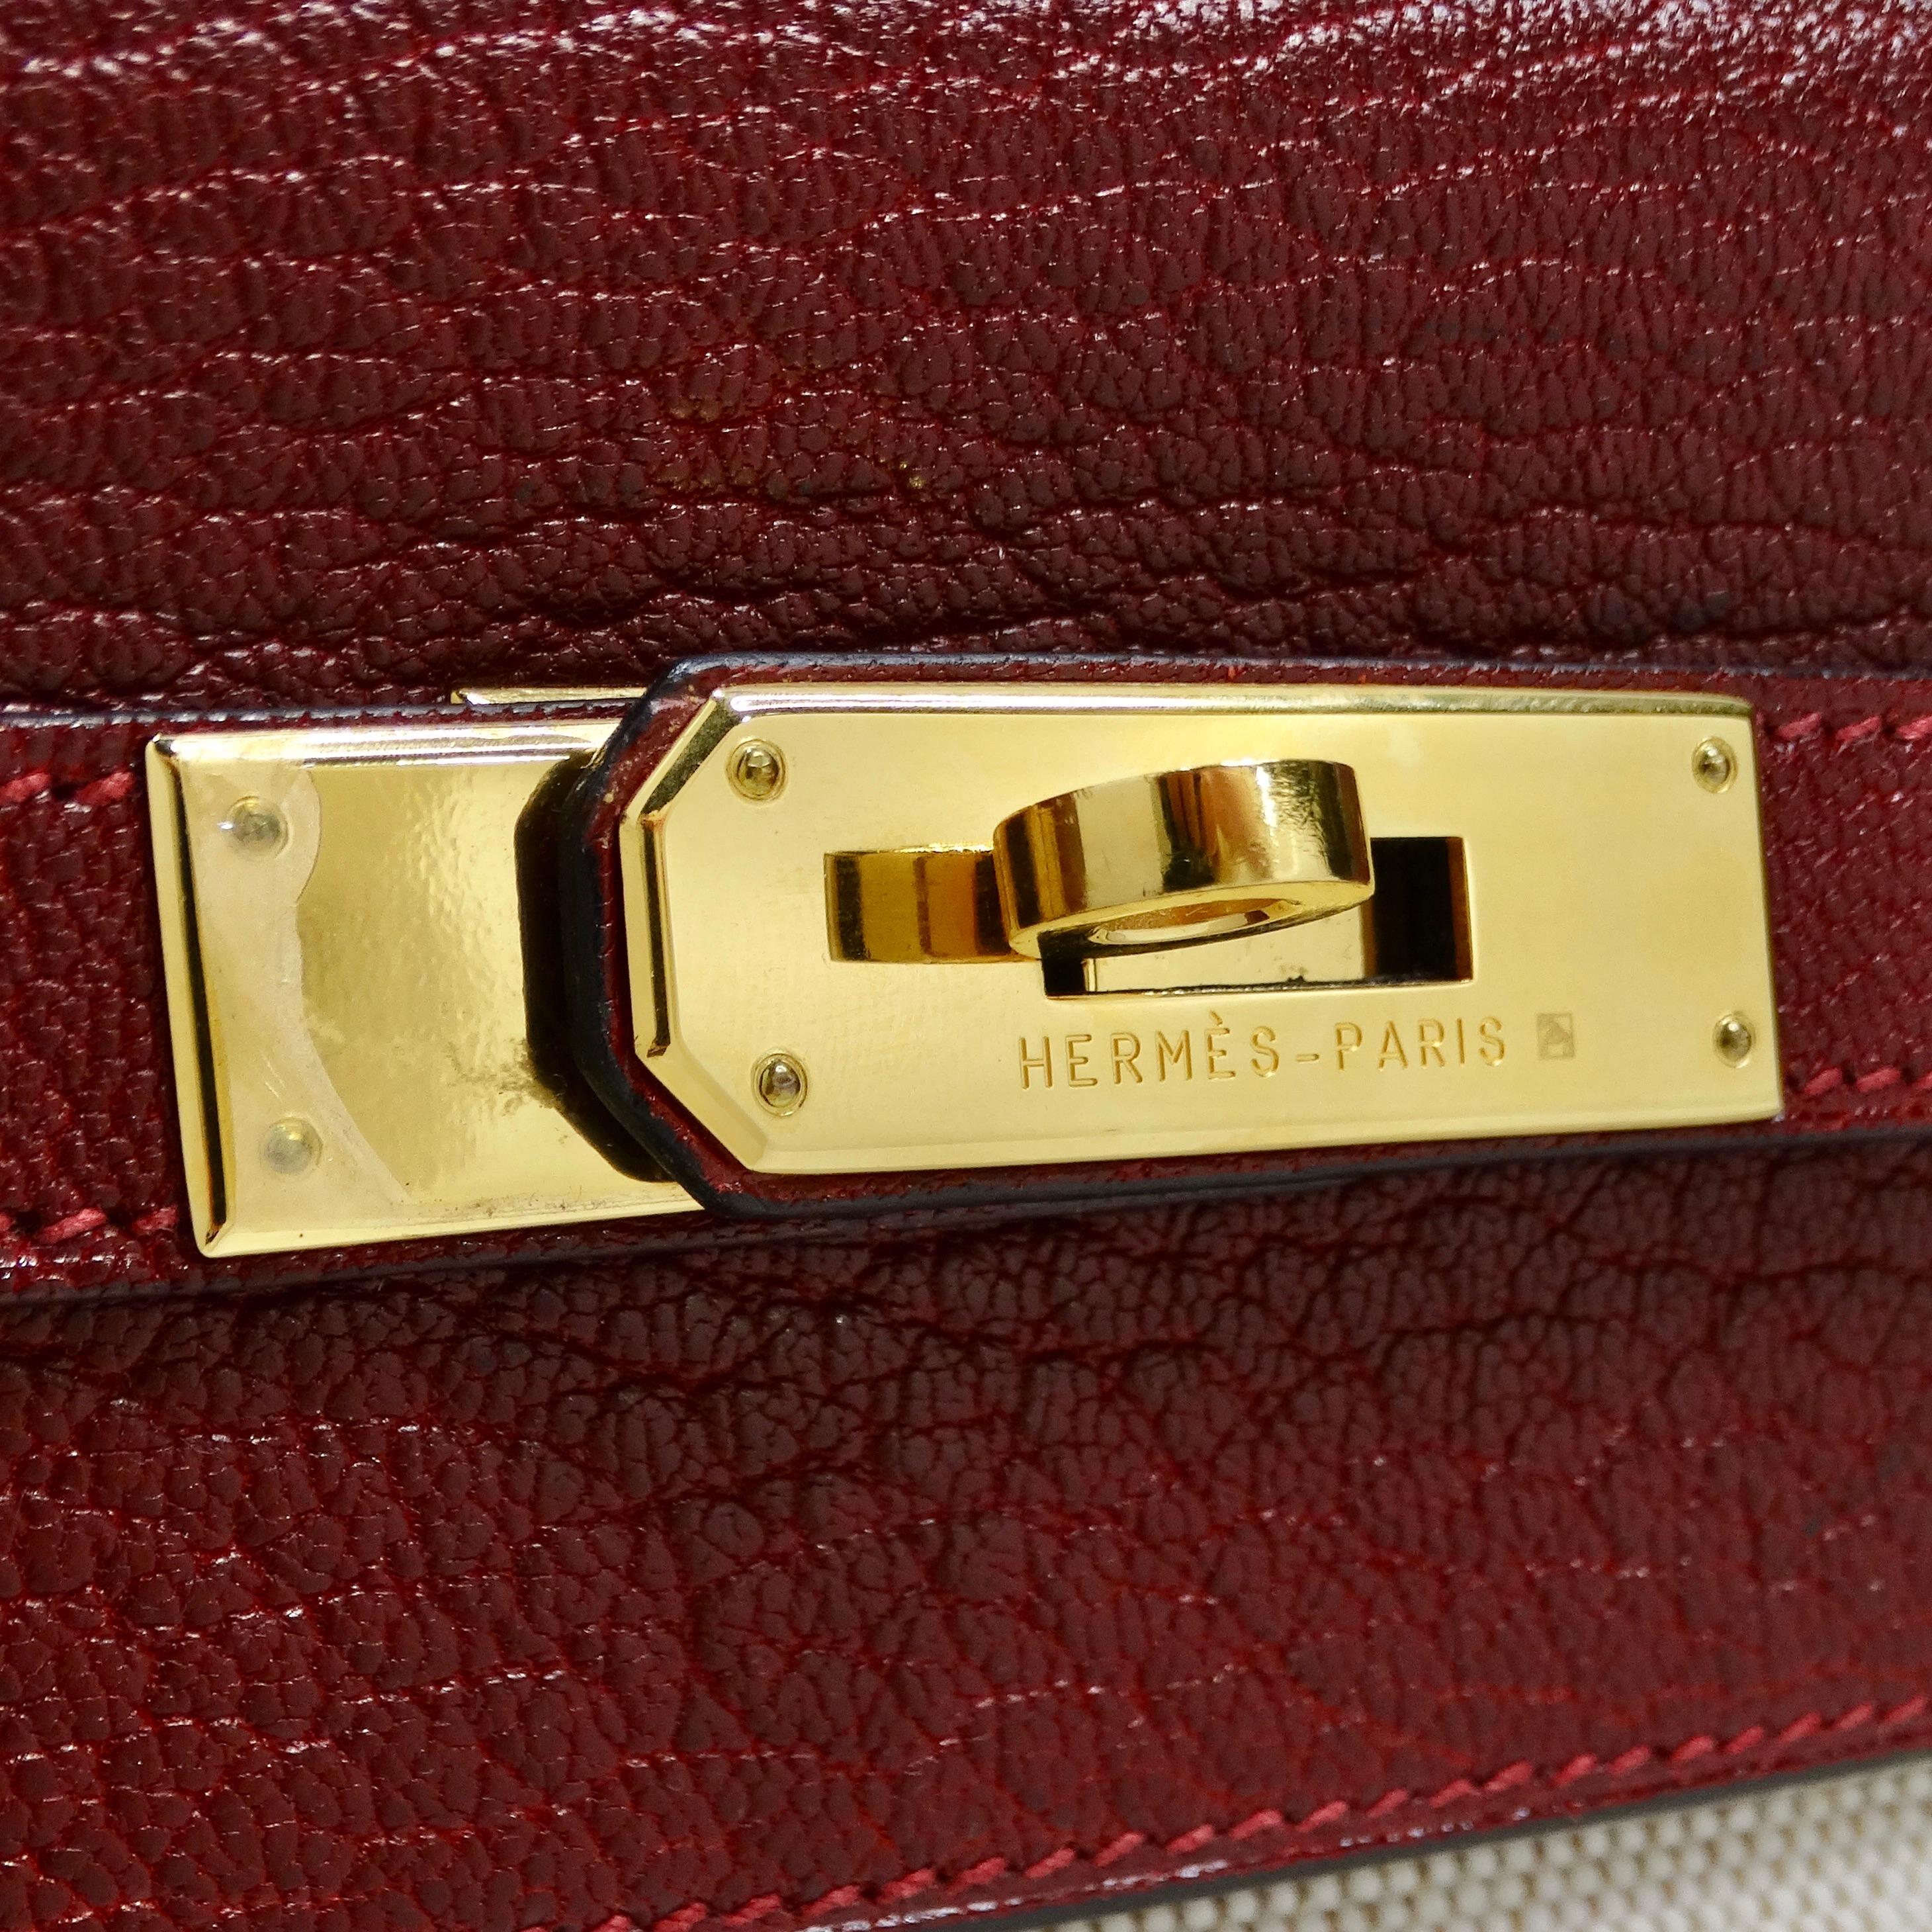 Hermes 2000 Kelly Retourne 25 Handbag In Excellent Condition For Sale In Scottsdale, AZ